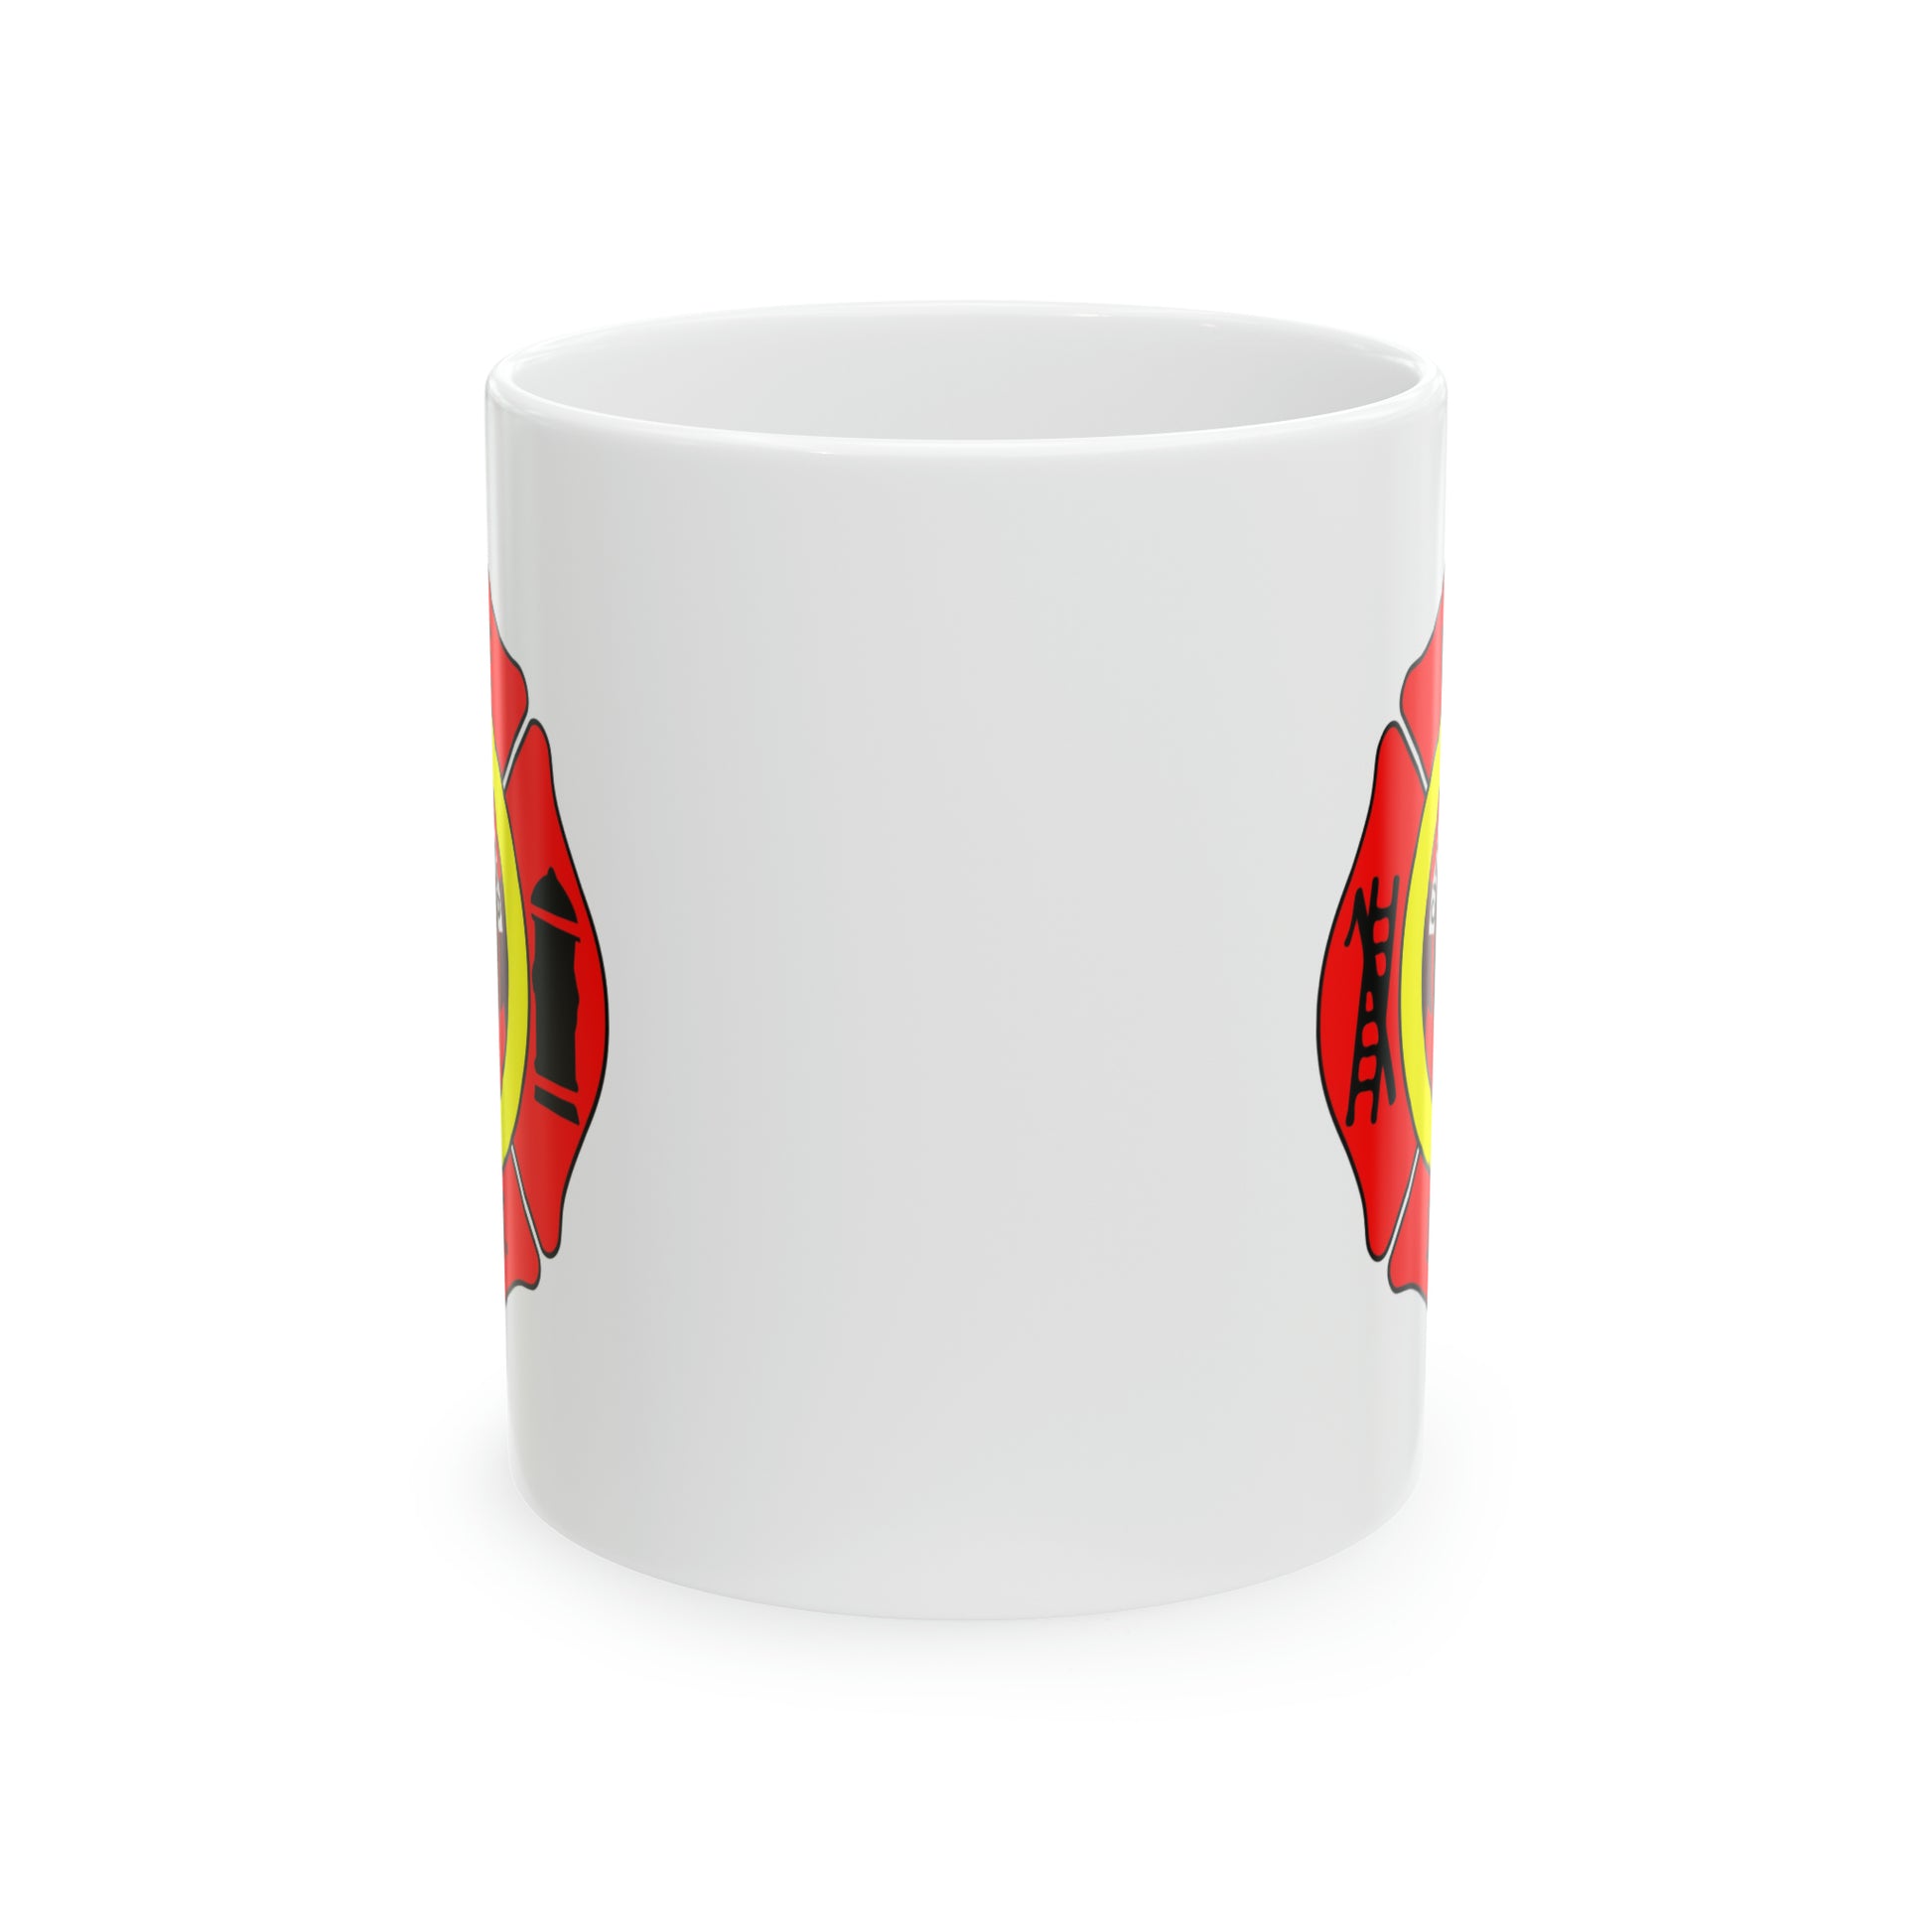 El Paso Fire Department Coffee Mug - Double Sided White Ceramic 11oz by TheGlassyLass.com